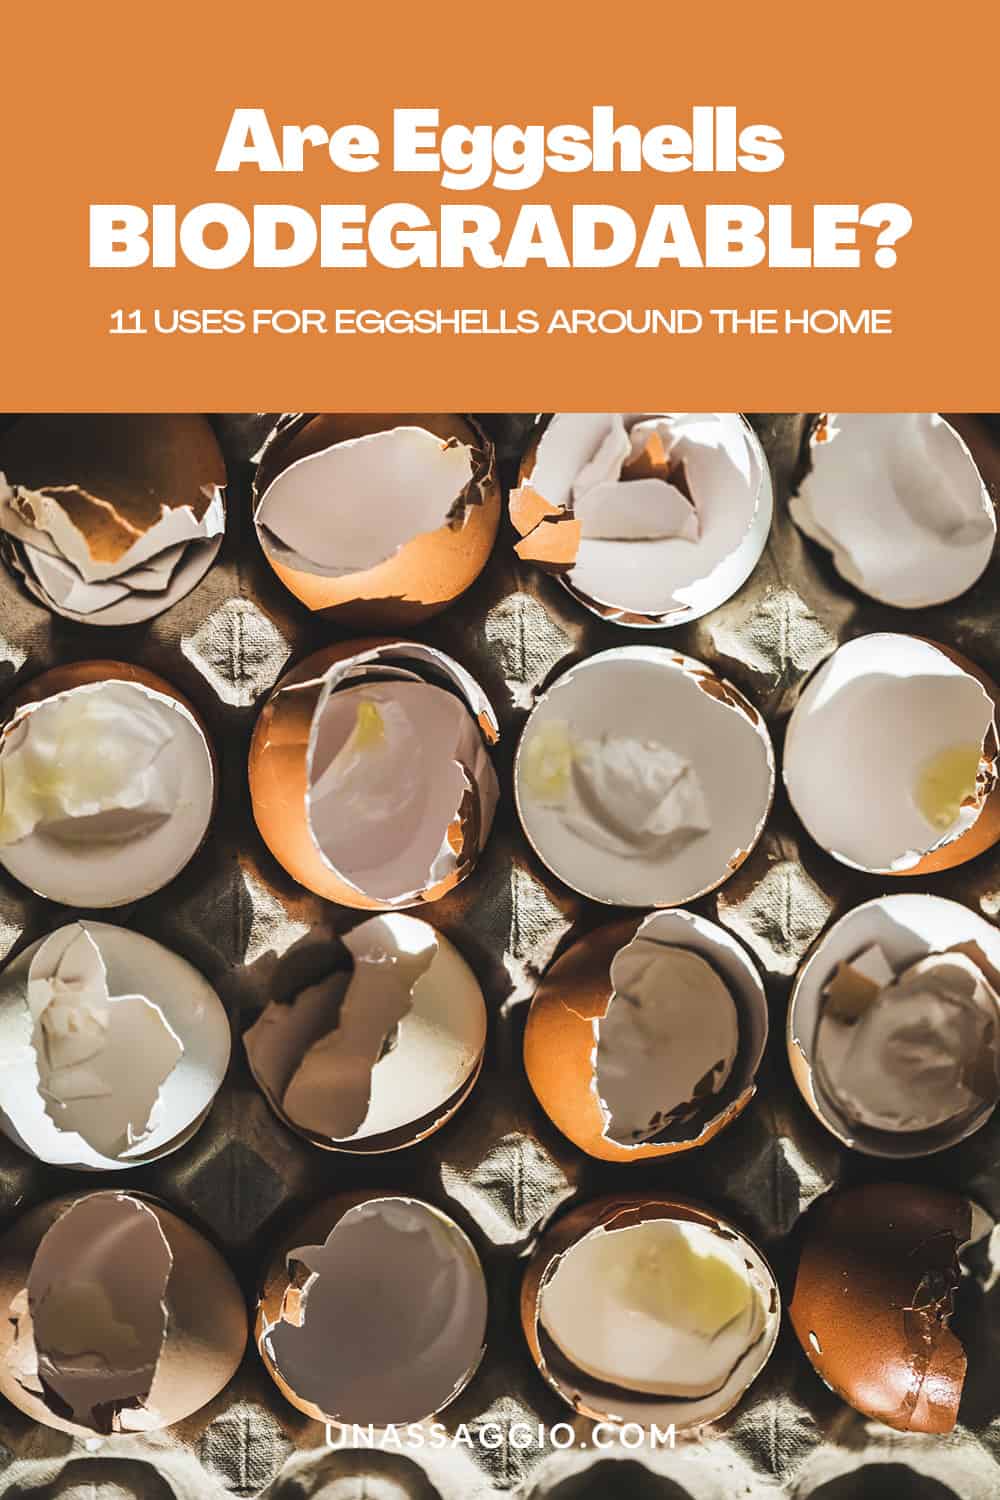 11 Uses For Eggshells Around The Home - Eggshells biodegradable